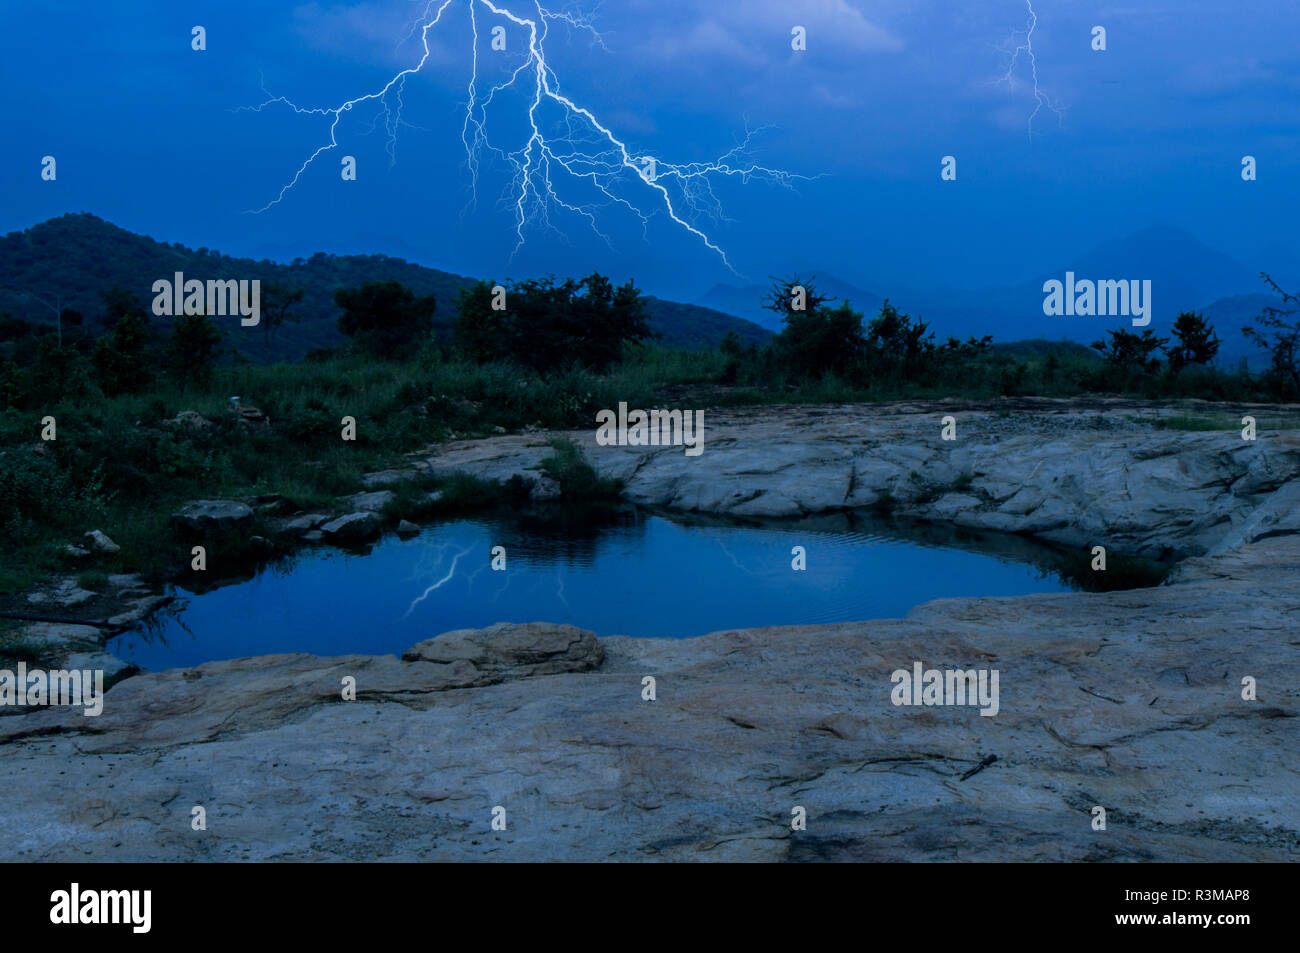 Lightning strikes over a dark forest Stock Photo